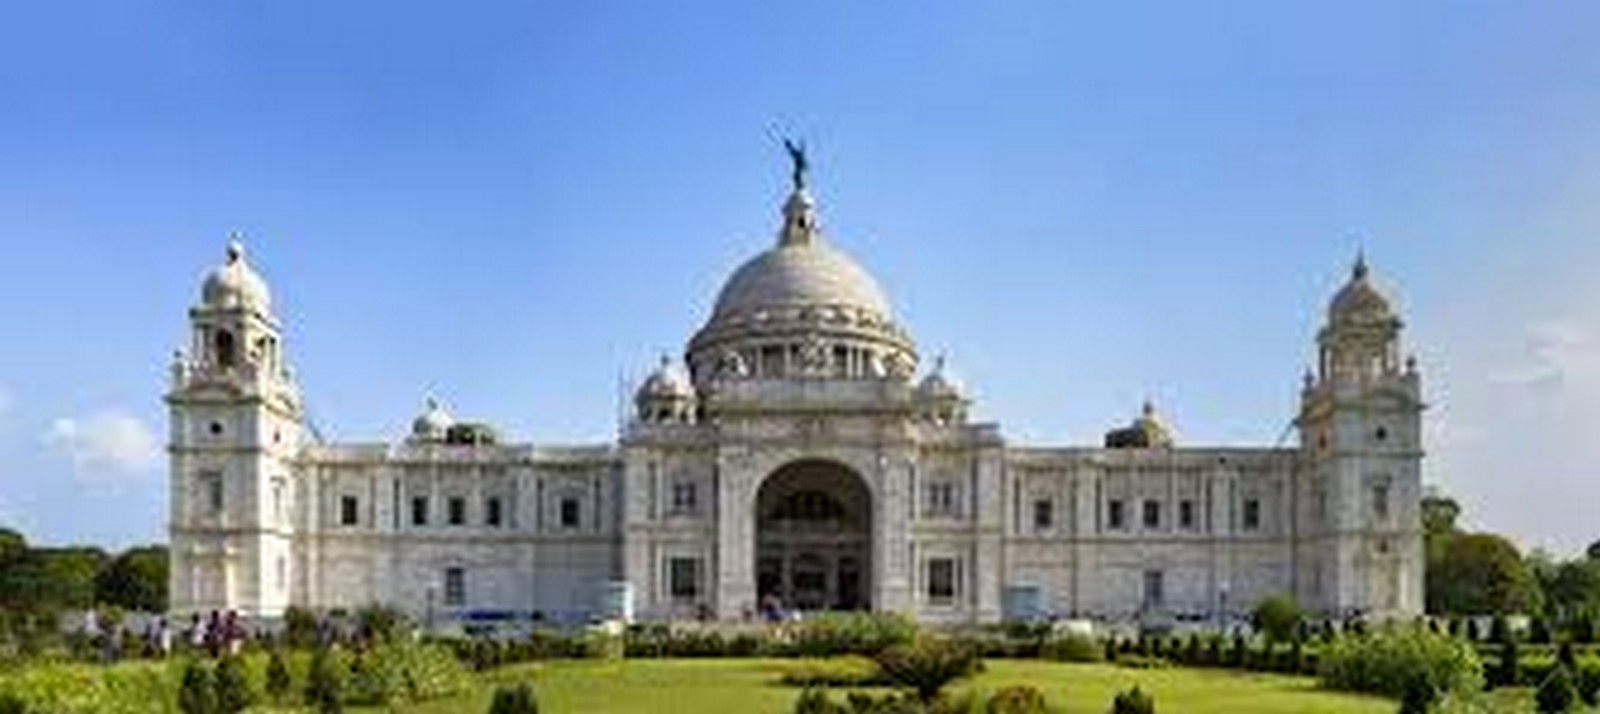 Famous building - Victoria Memorial, India - Sheet1